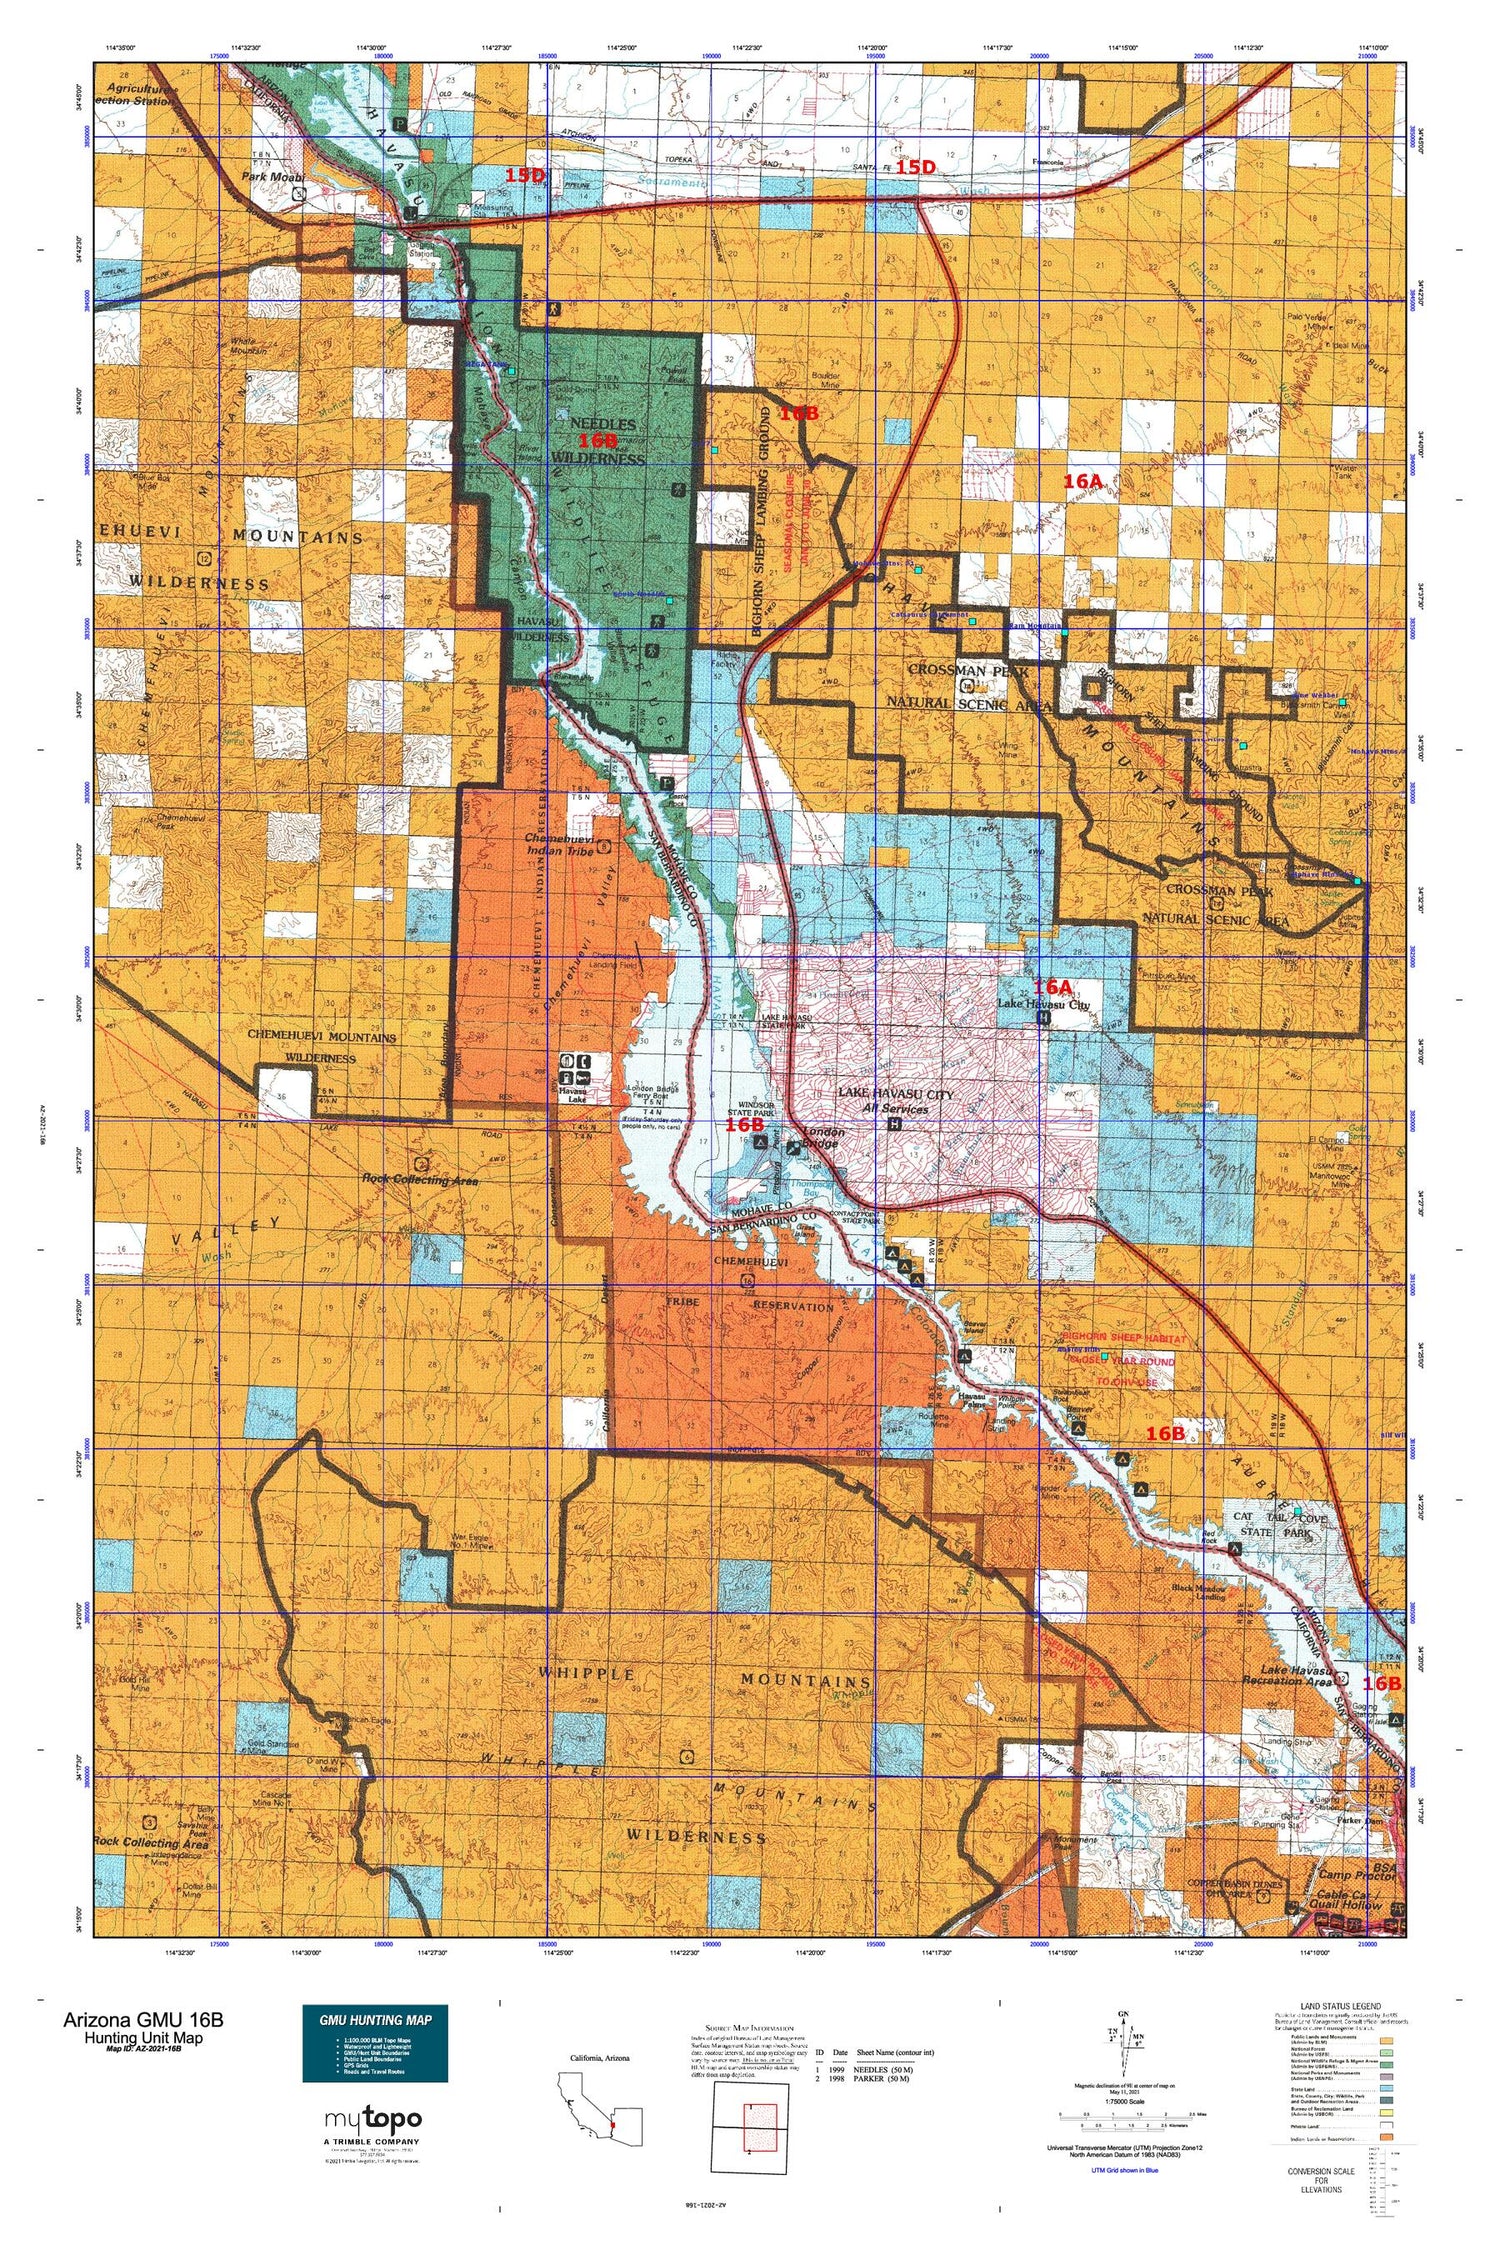 Arizona GMU 16B Map Image